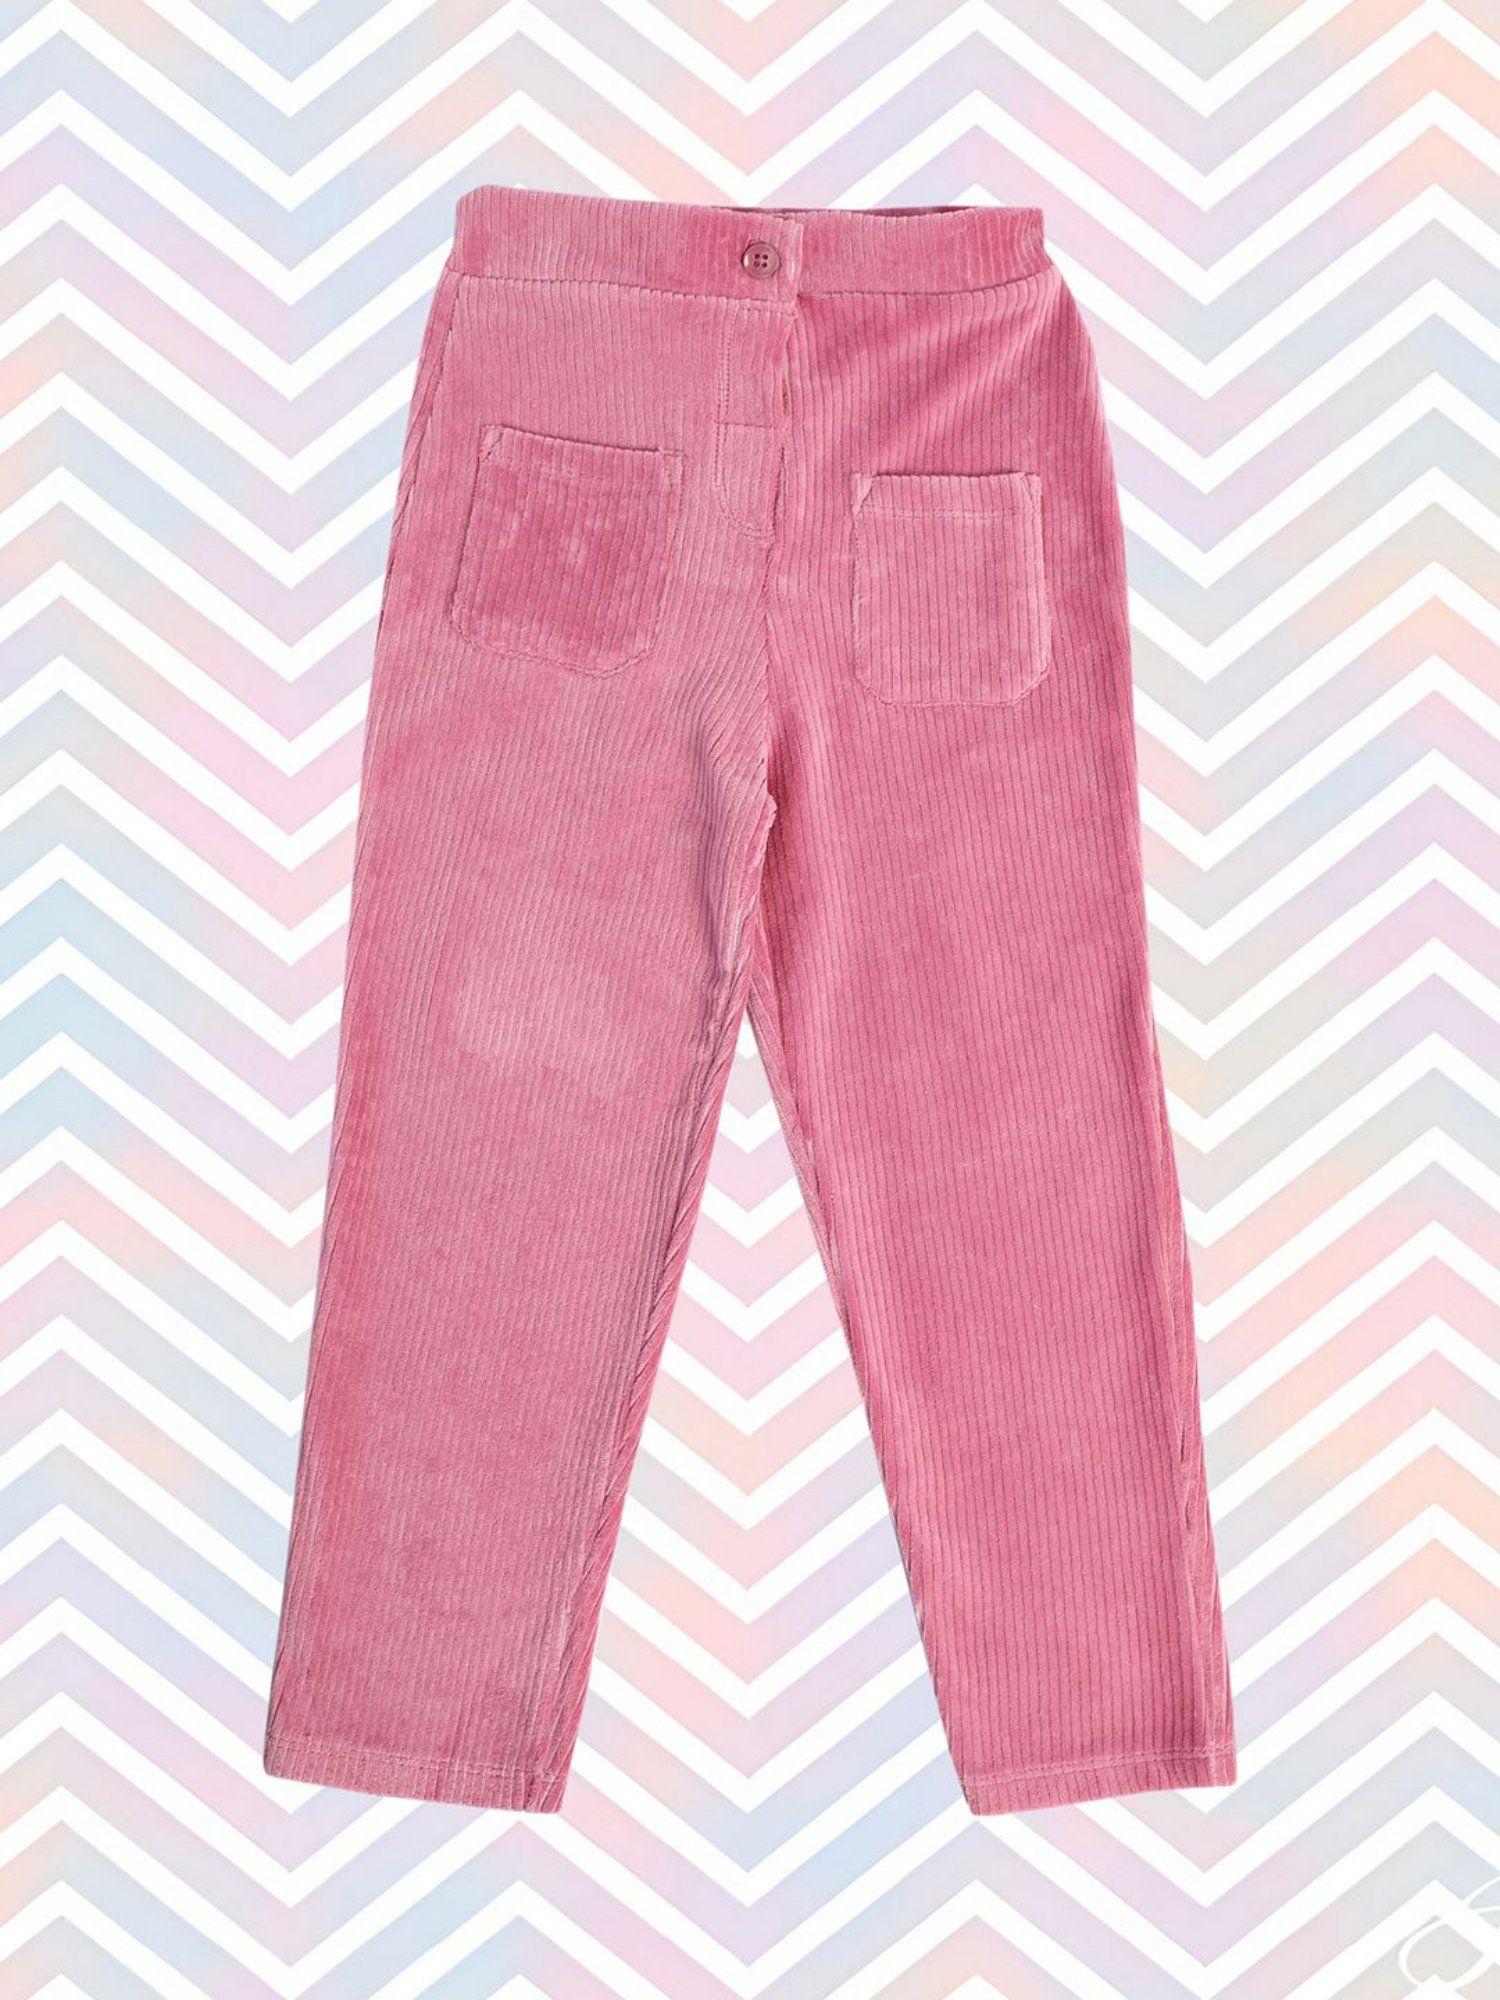 kids girls pink knit pants